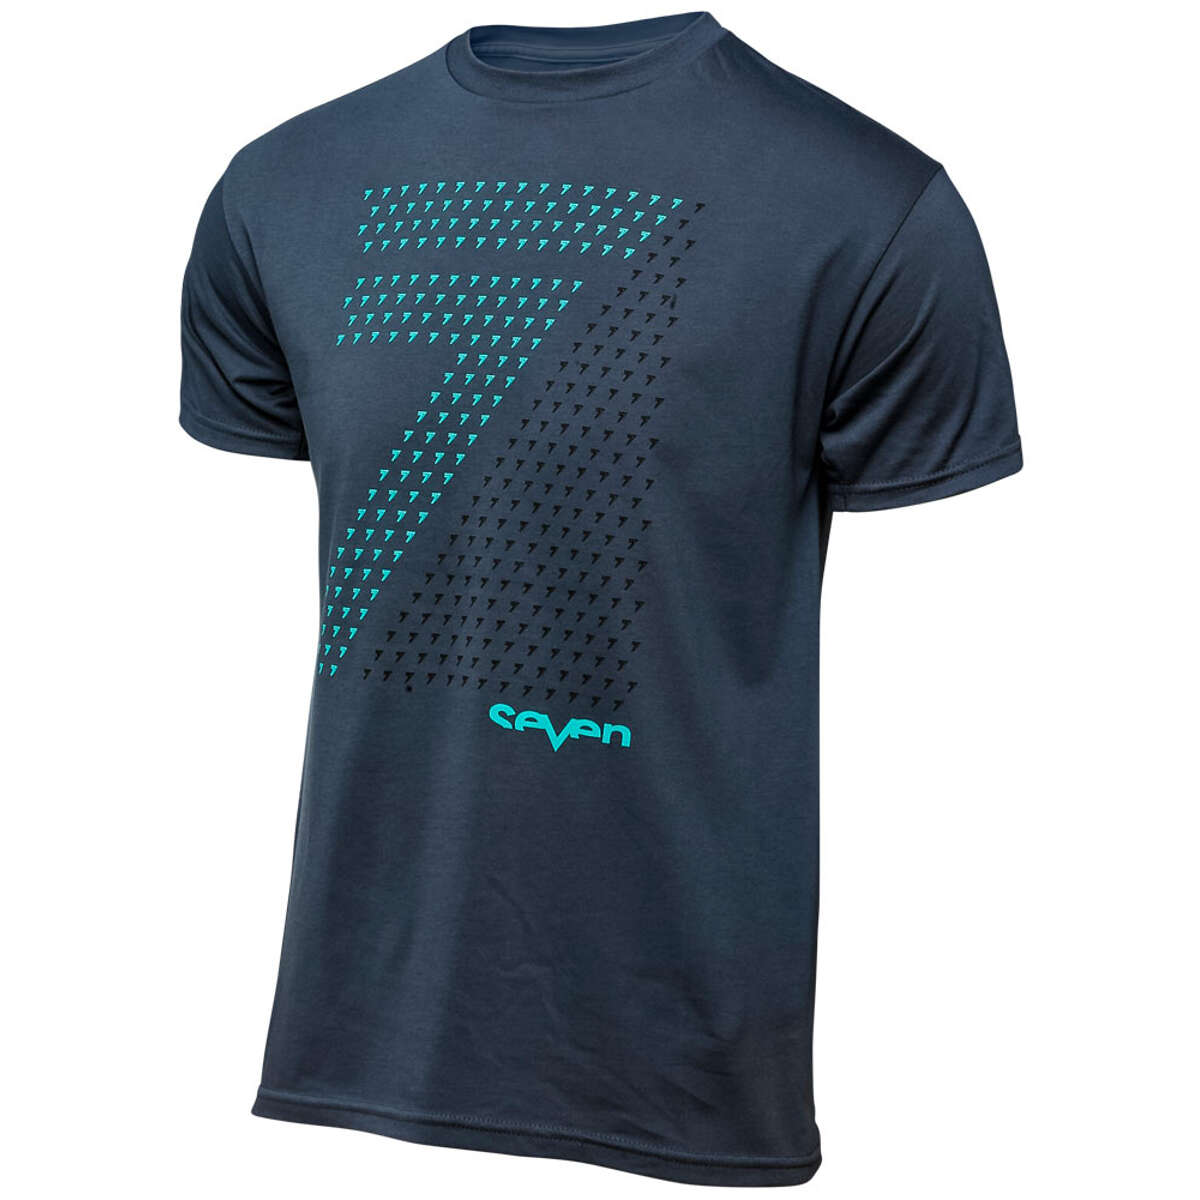 Seven MX T-Shirt Pennon Charcoal